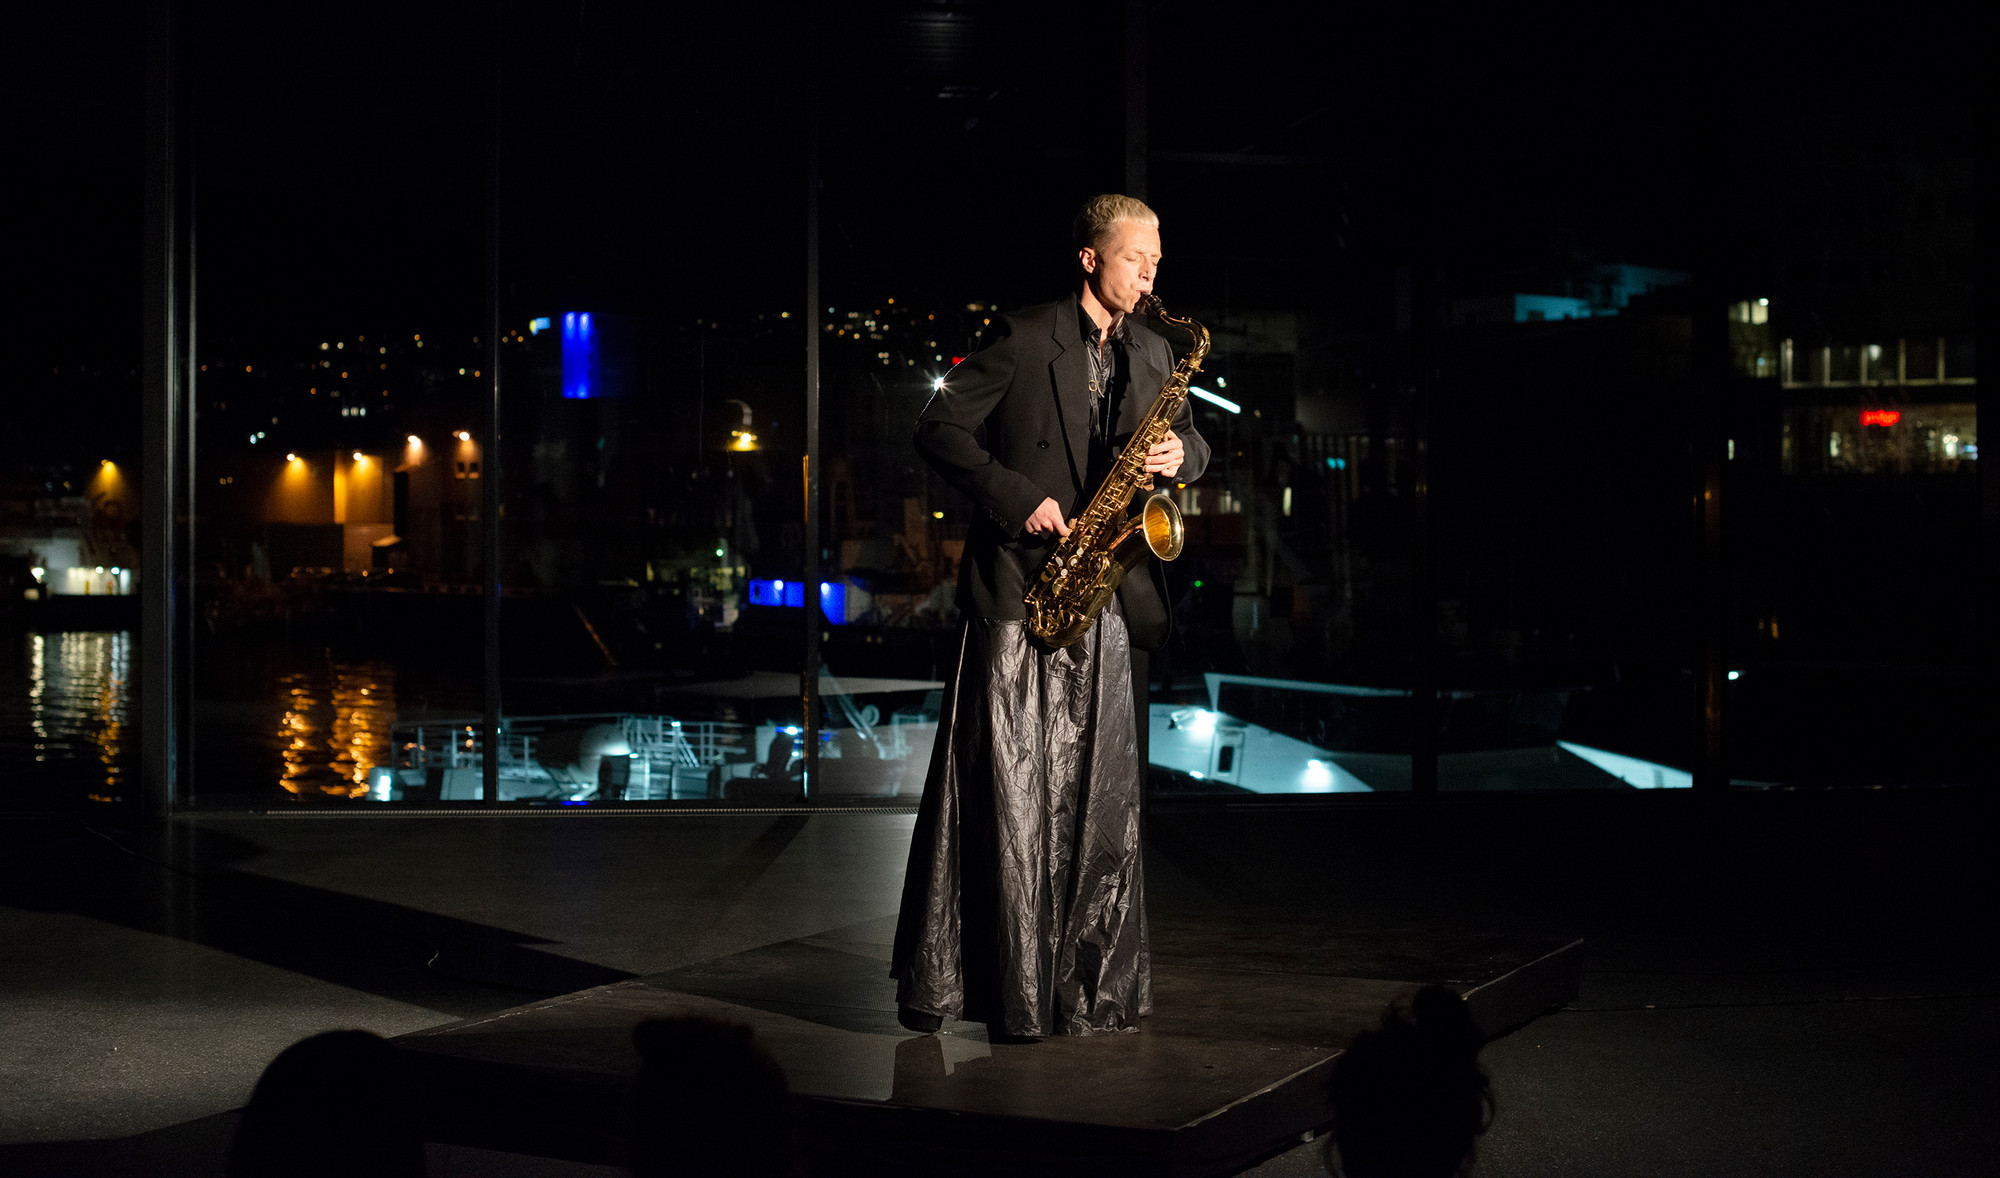 Giske performing at Prostneset, Tromsø. Photo: Mihaly Stefanovicz